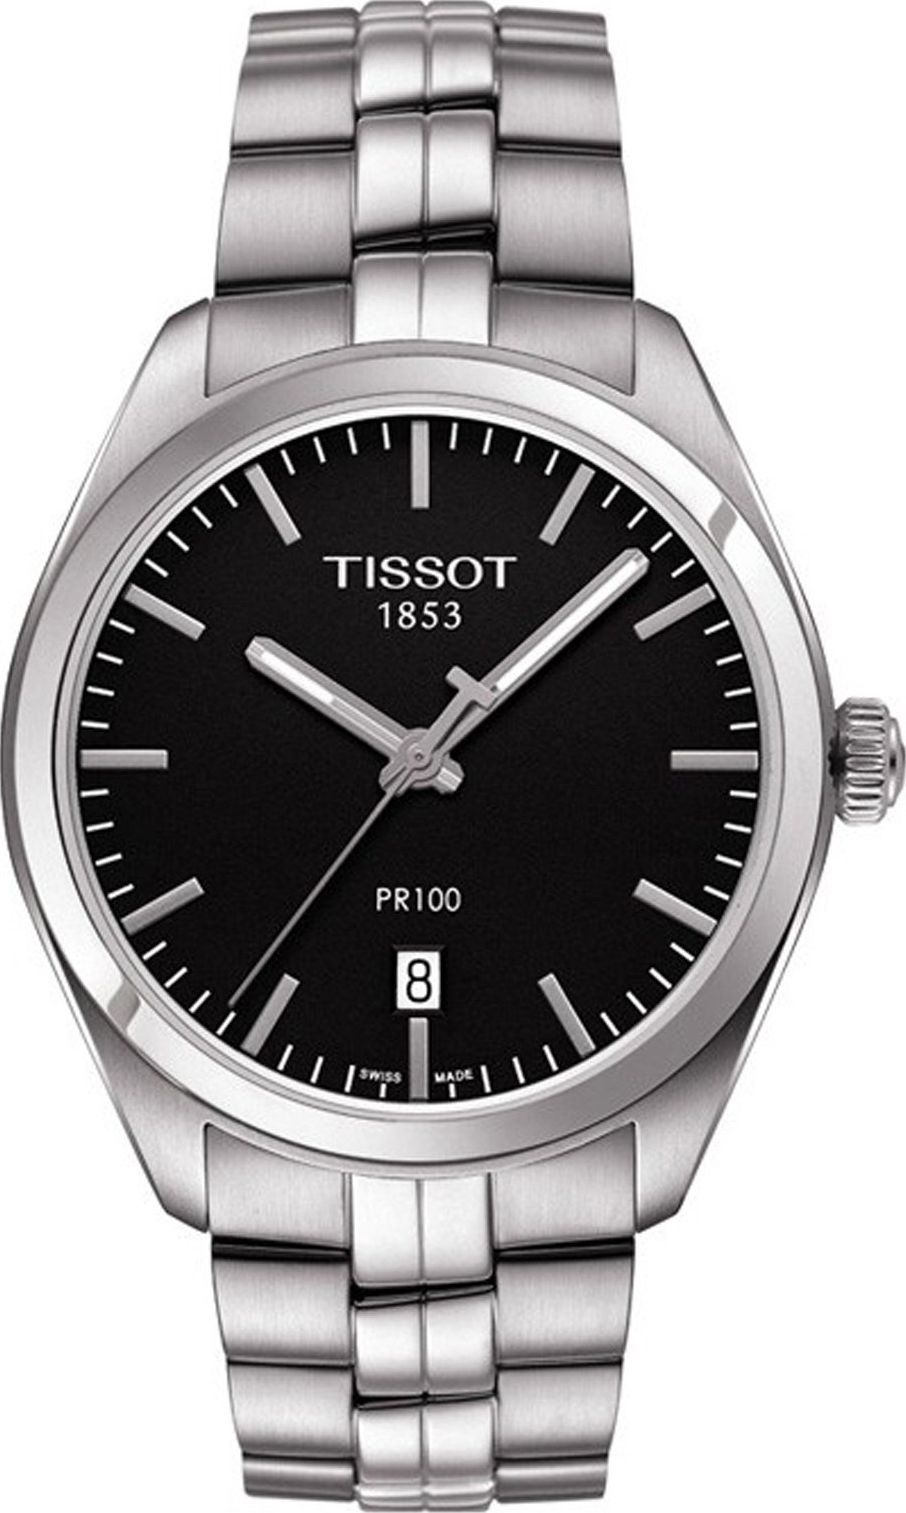 Tissot PR 100 39 mm Watch in Black Dial For Men - 1